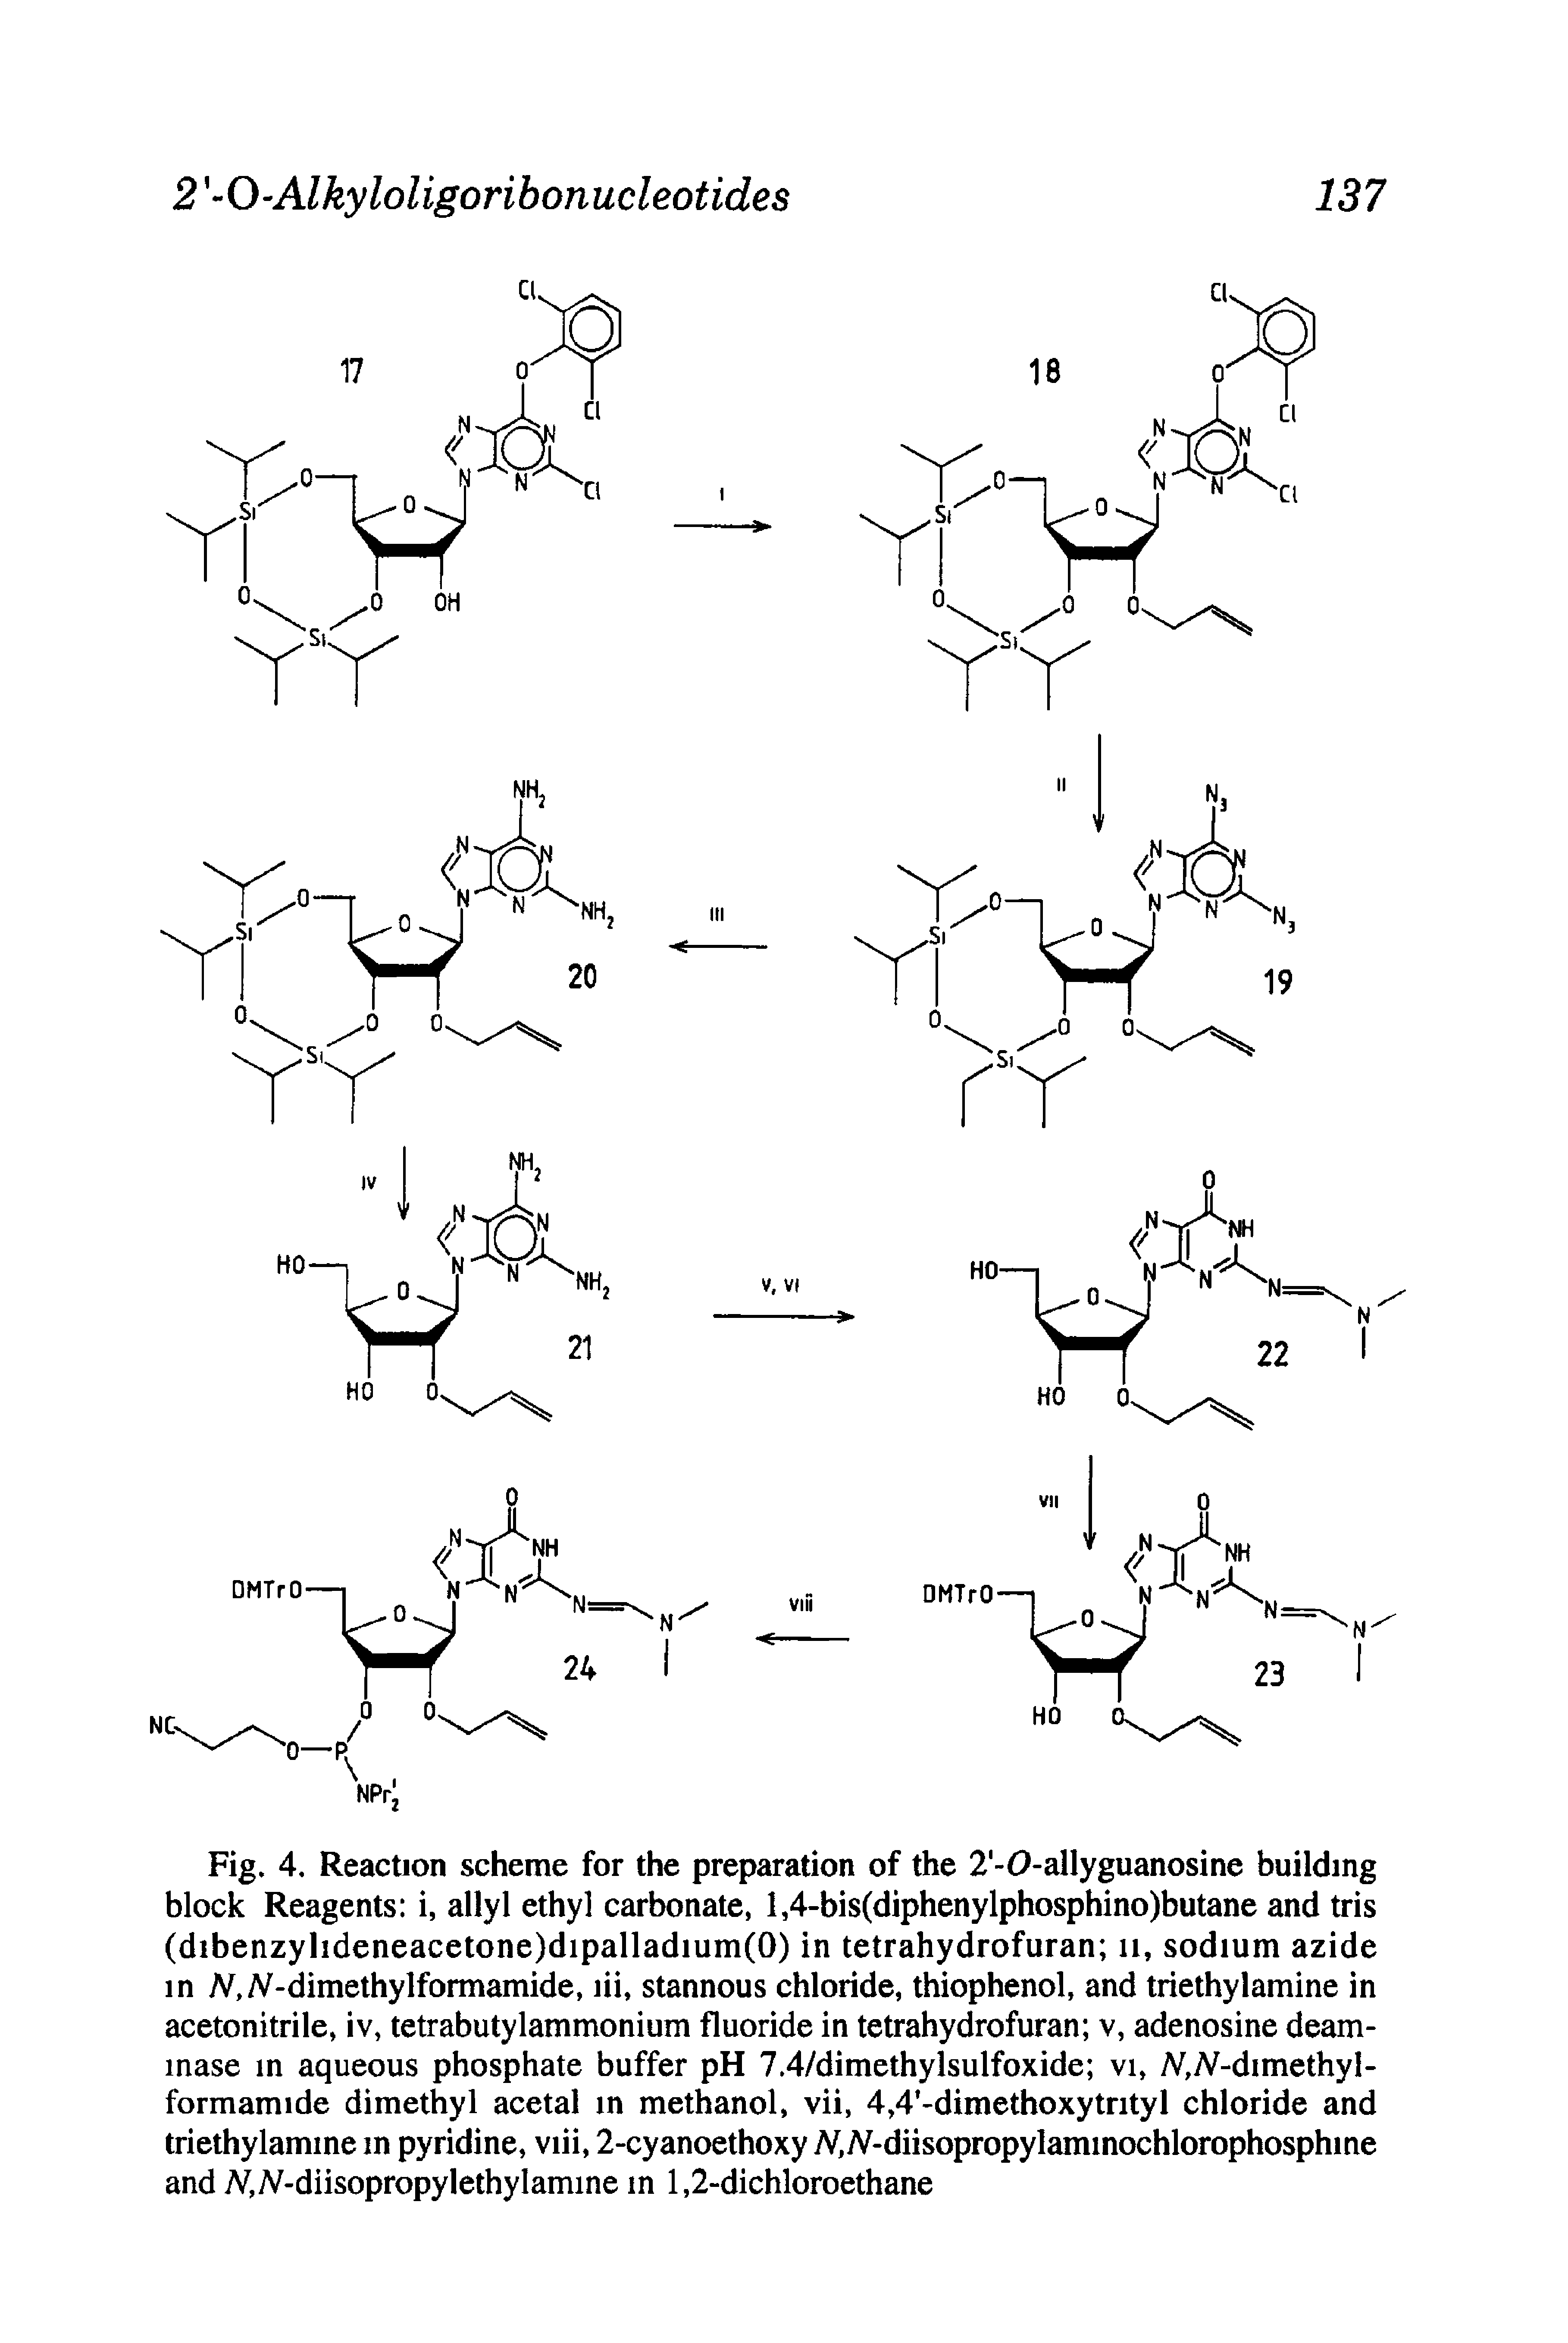 Fig. 4, Reaction scheme for the preparation of the 2 -0-allyguanosine building block Reagents i, allyl ethyl carbonate, l,4-bis(diphenylphosphino)butane and tris (dibenzylideneacetone)dipalladium(O) in tetrahydrofuran ii, sodium azide in MA -dimethylformamide, lii, stannous chloride, thiophenol, and triethylamine in acetonitrile, iv, tetrabutylammonium fluoride in tetrahydrofuran v, adenosine deaminase in aqueous phosphate buffer pH 7.4/dimethylsulfoxide vi, A, A -dimethyl-formamide dimethyl acetal in methanol, vii, 4,4 -dimethoxytrityl chloride and triethylamine in pyridine, viii, 2-cyanoethoxy A, iV-diisopropylaminochlorophosphme and A, //-diisopropylethylamine in 1,2-dichloroethane...